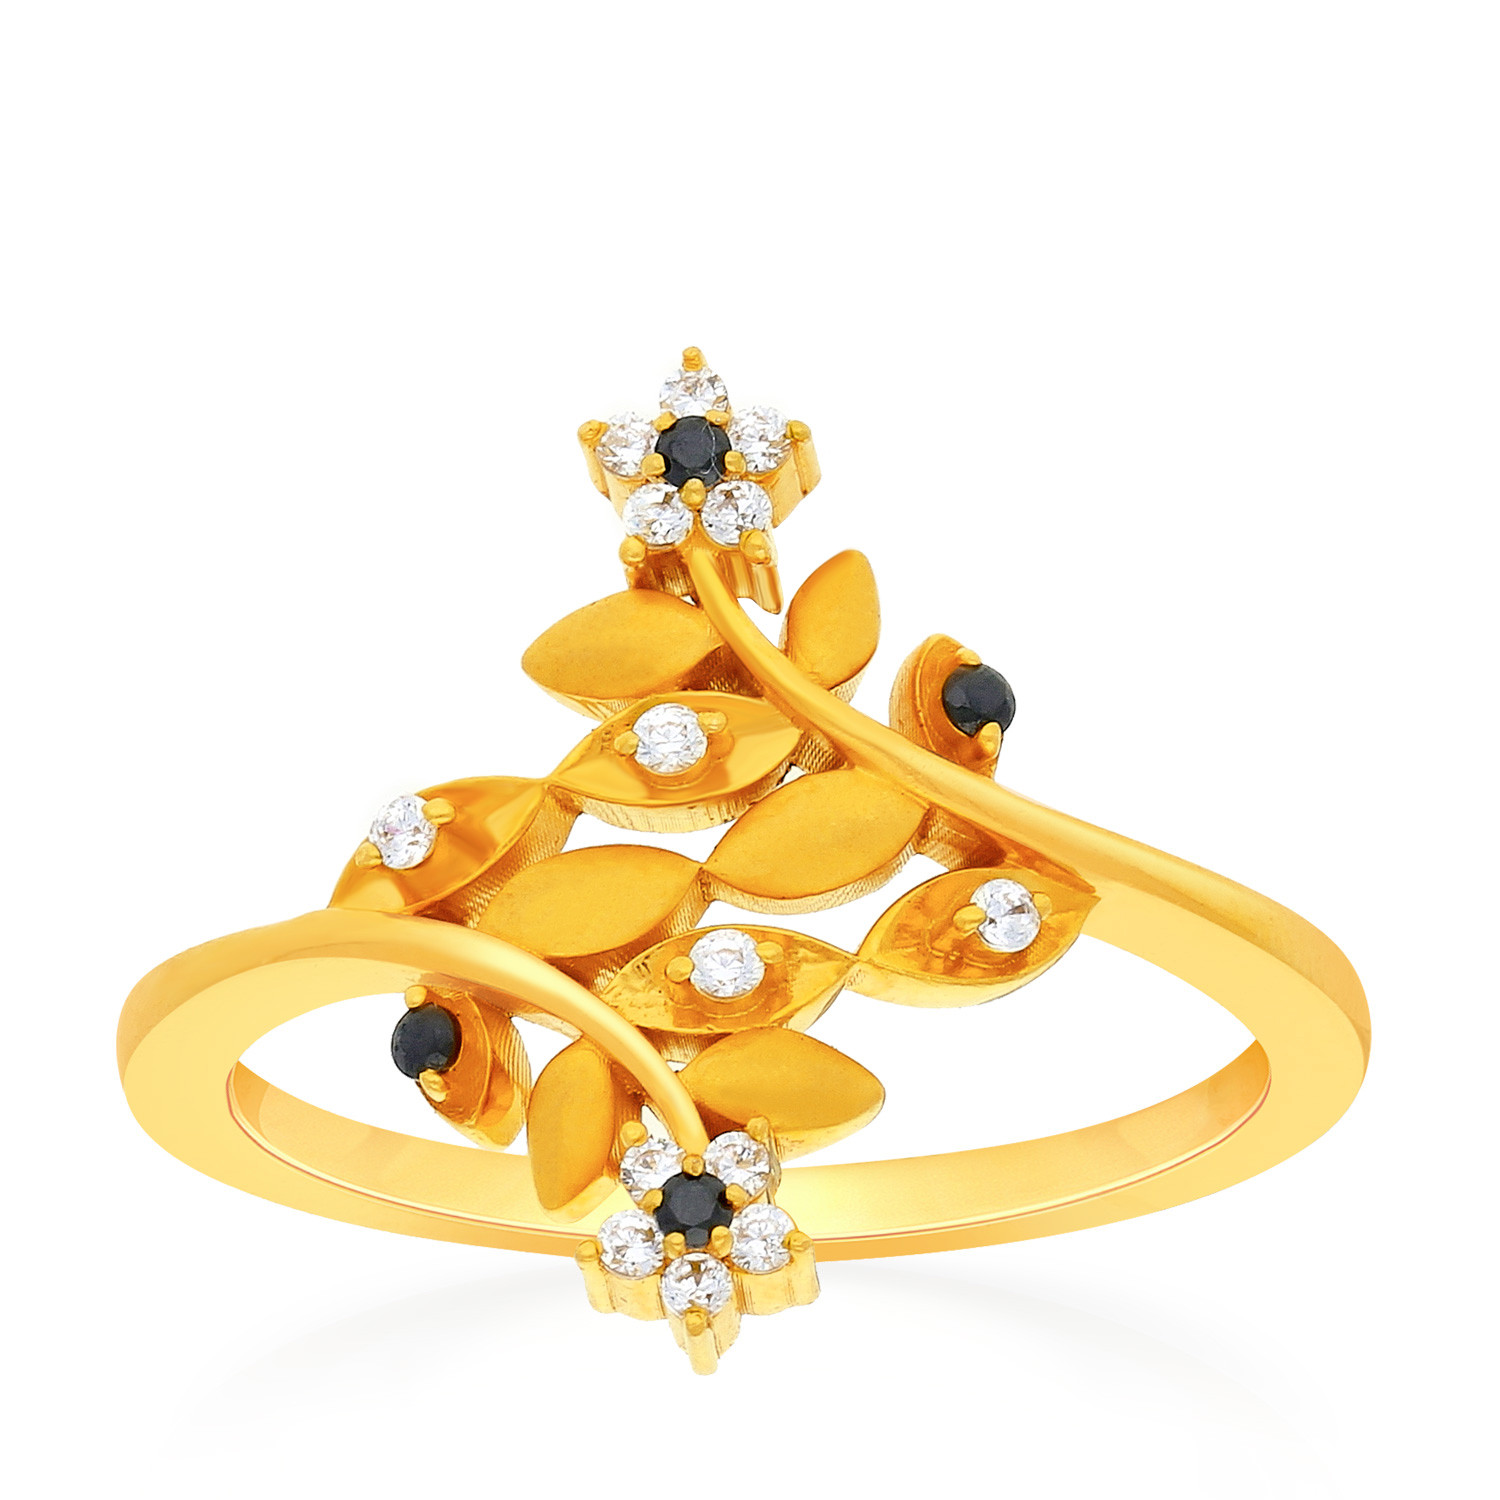 Malabar Daily wear gold rings designs | 18kt gold ring designs |Light  weight stone work gold rings💍 - YouTube